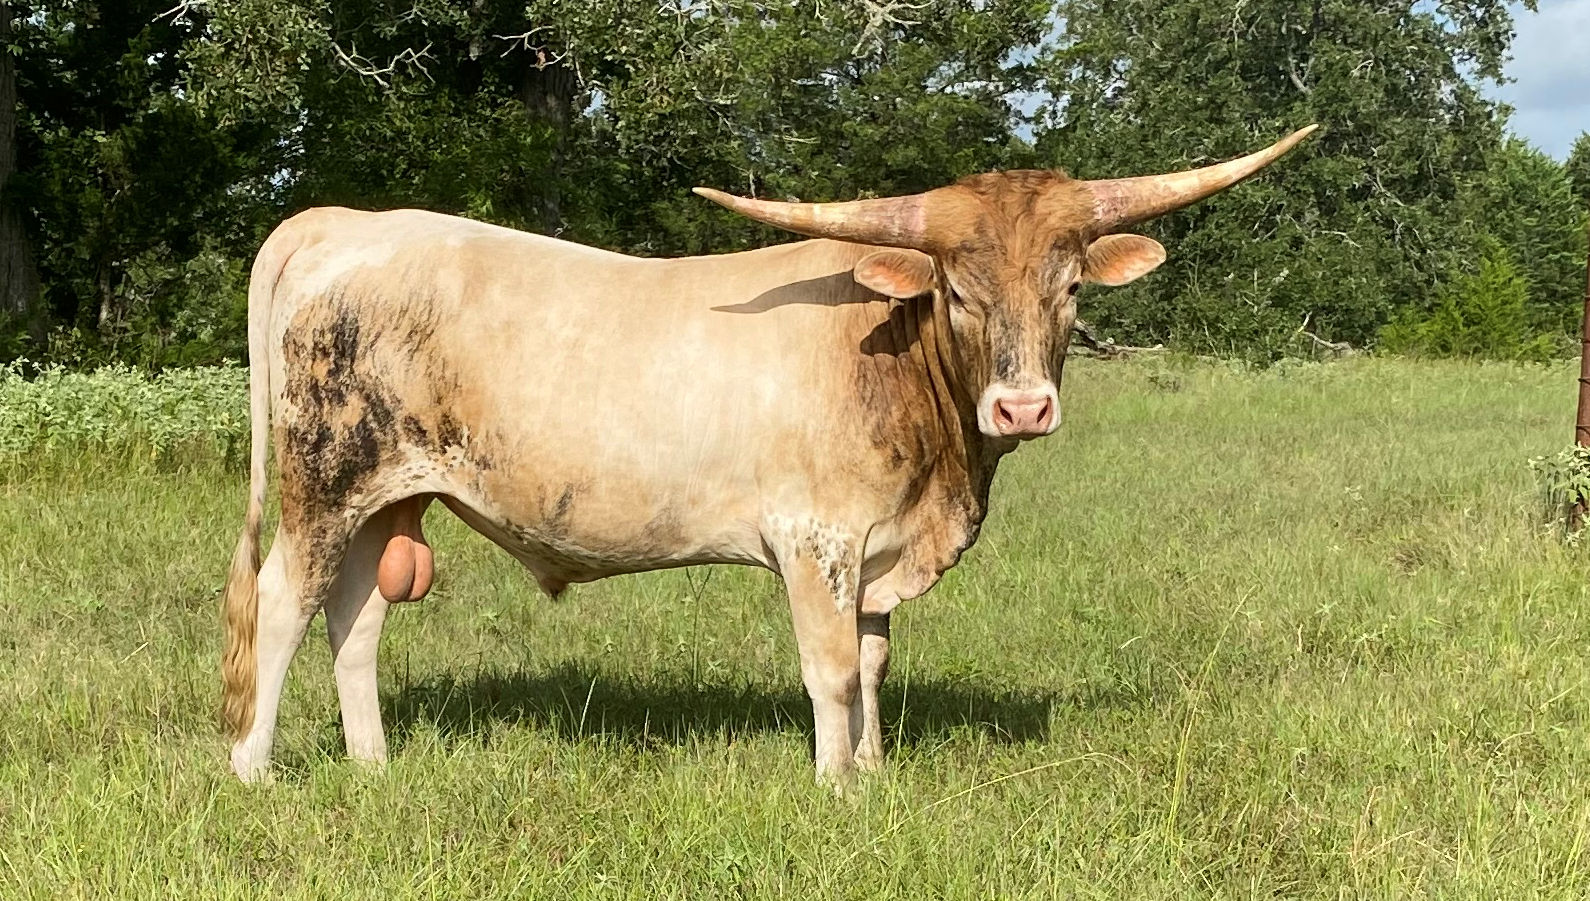 Texas Longhorn herd sire - Razor Sharp Star